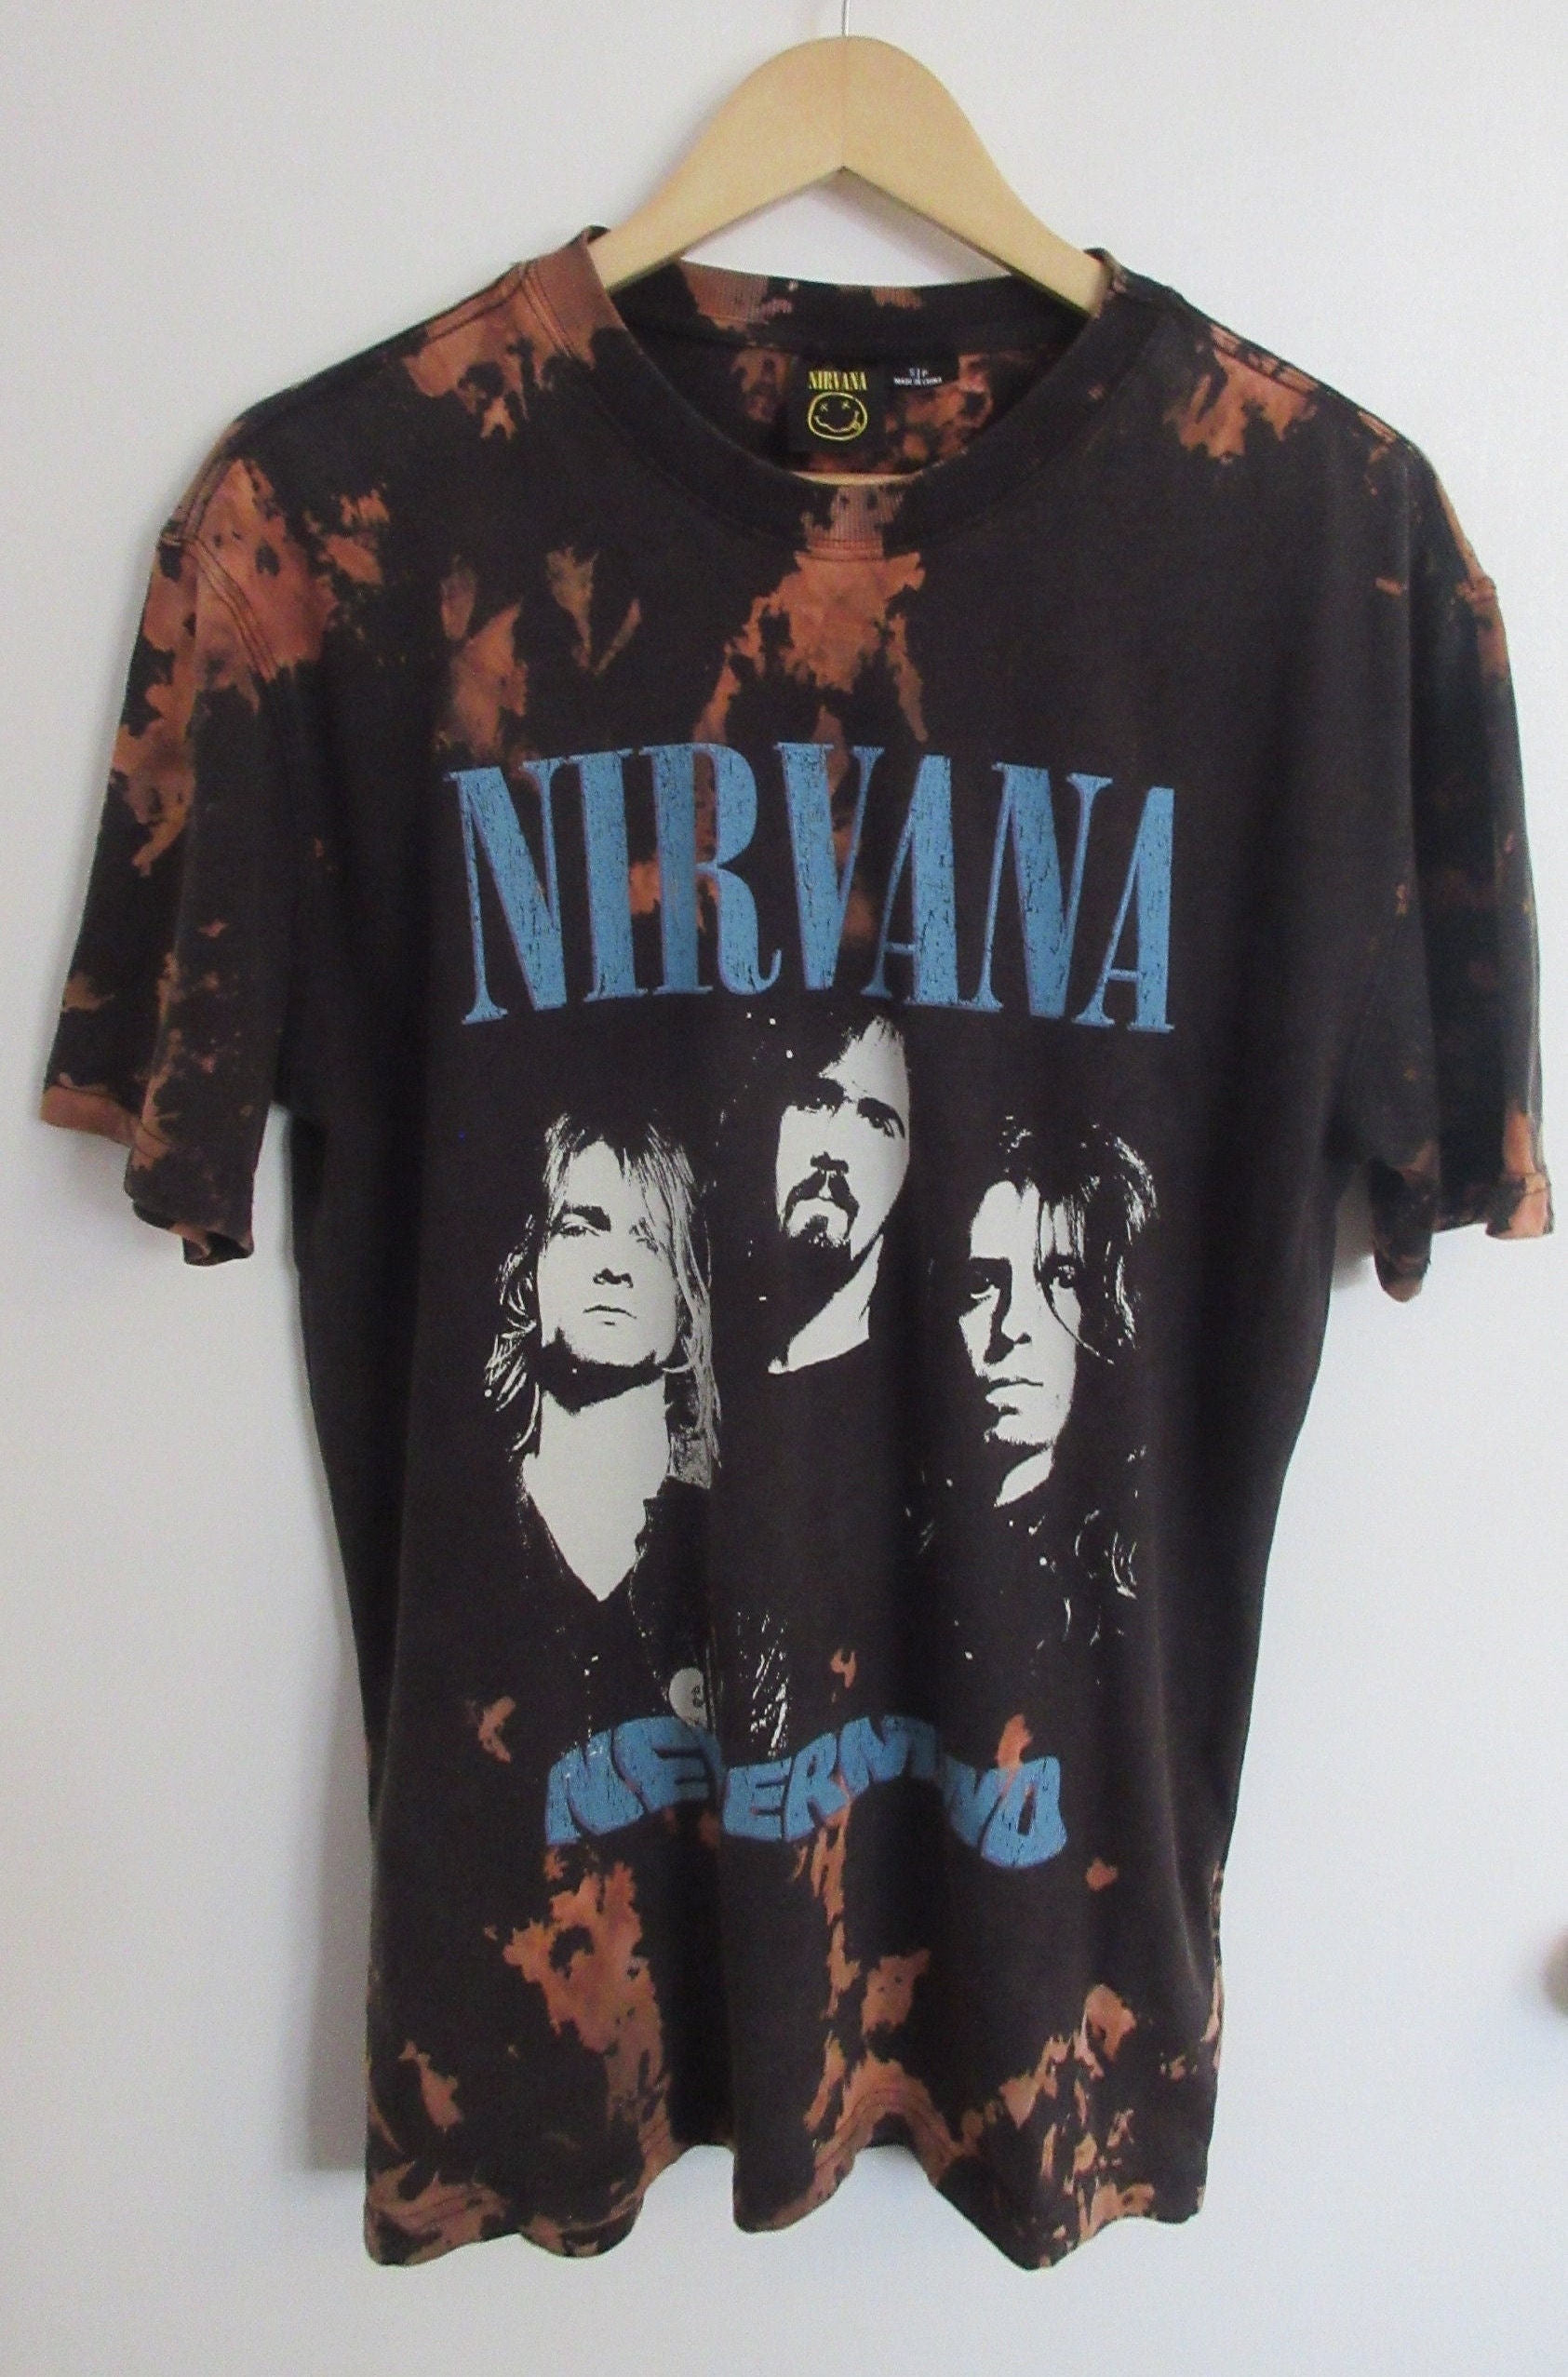 NIRVANA band tee | Nevermind | Reverse dye | Vintage style shirt